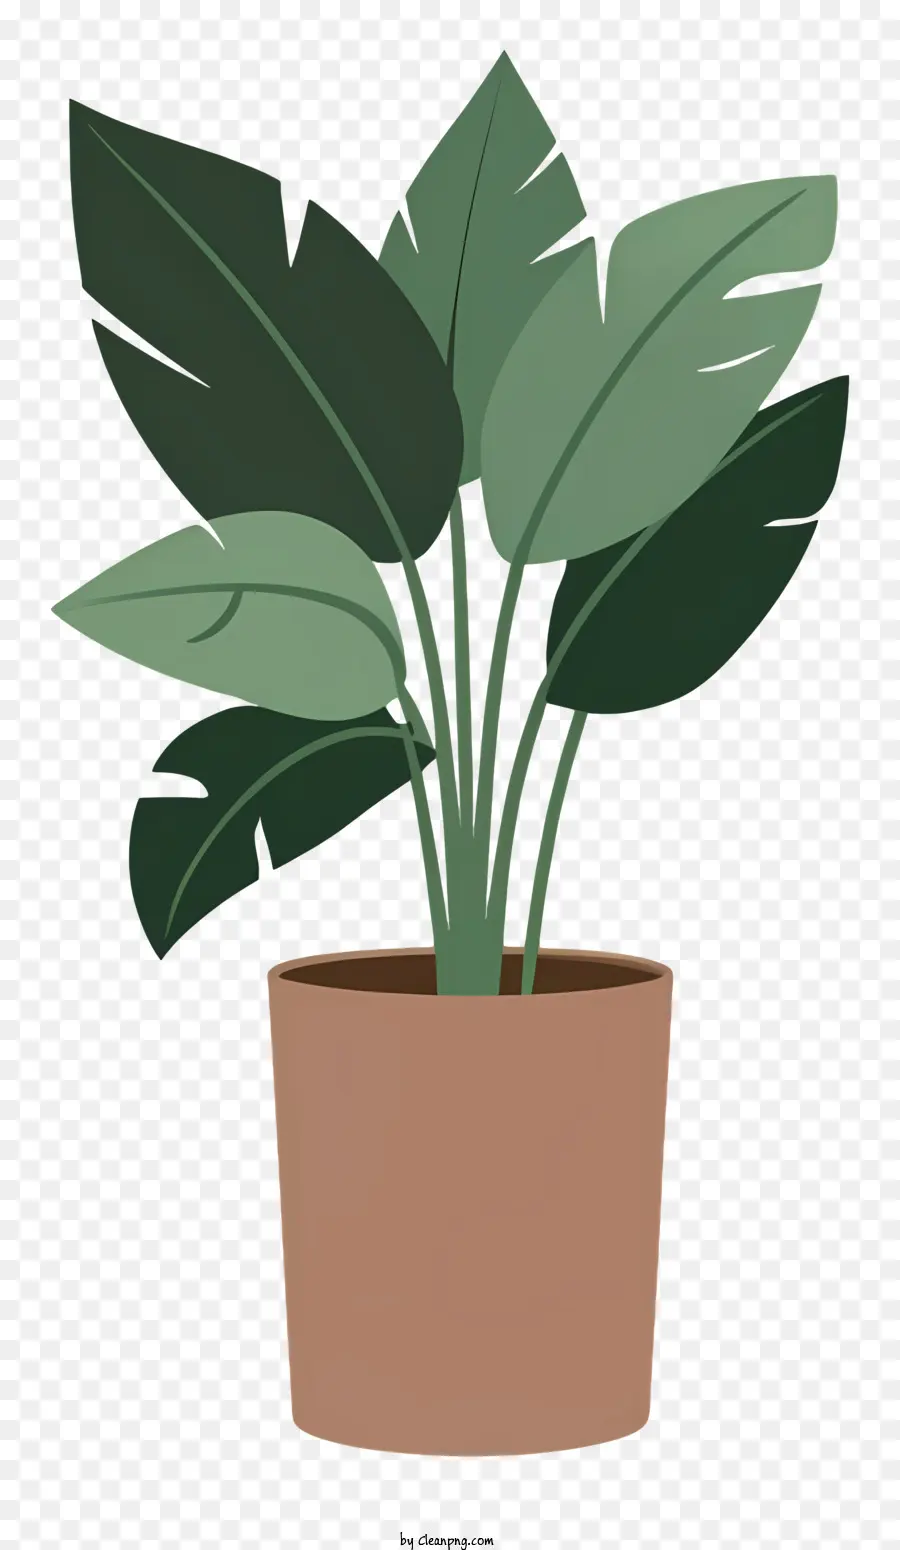 pianta in vaso foglie grandi piccole foglie verdi stelo terreno in vaso - Pianta in vaso con grandi foglie in pentola di argilla